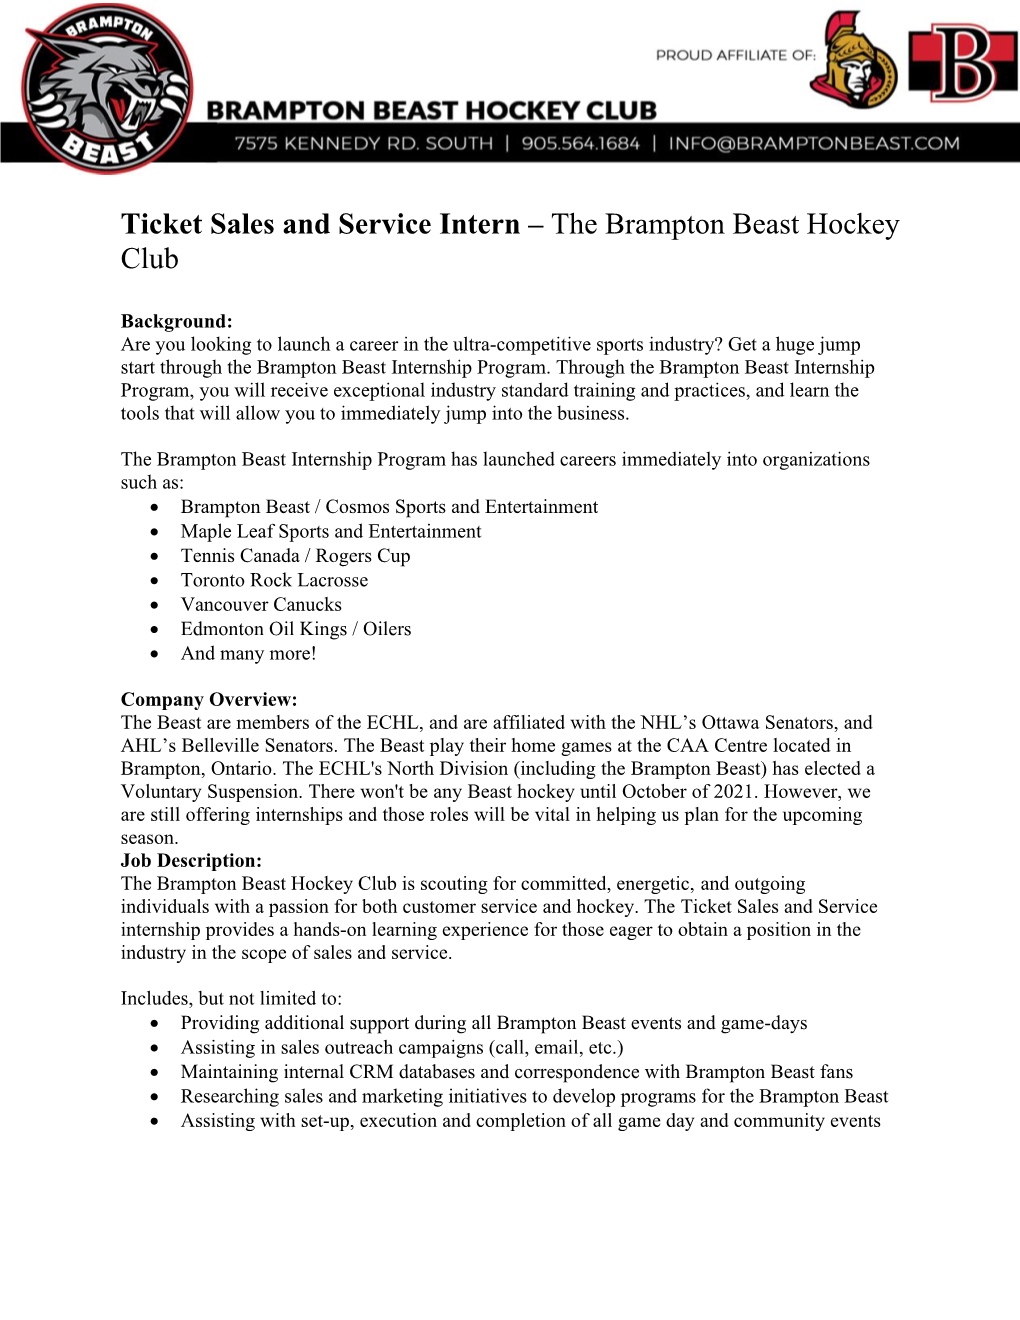 Ticket Sales and Service Intern – the Brampton Beast Hockey Club